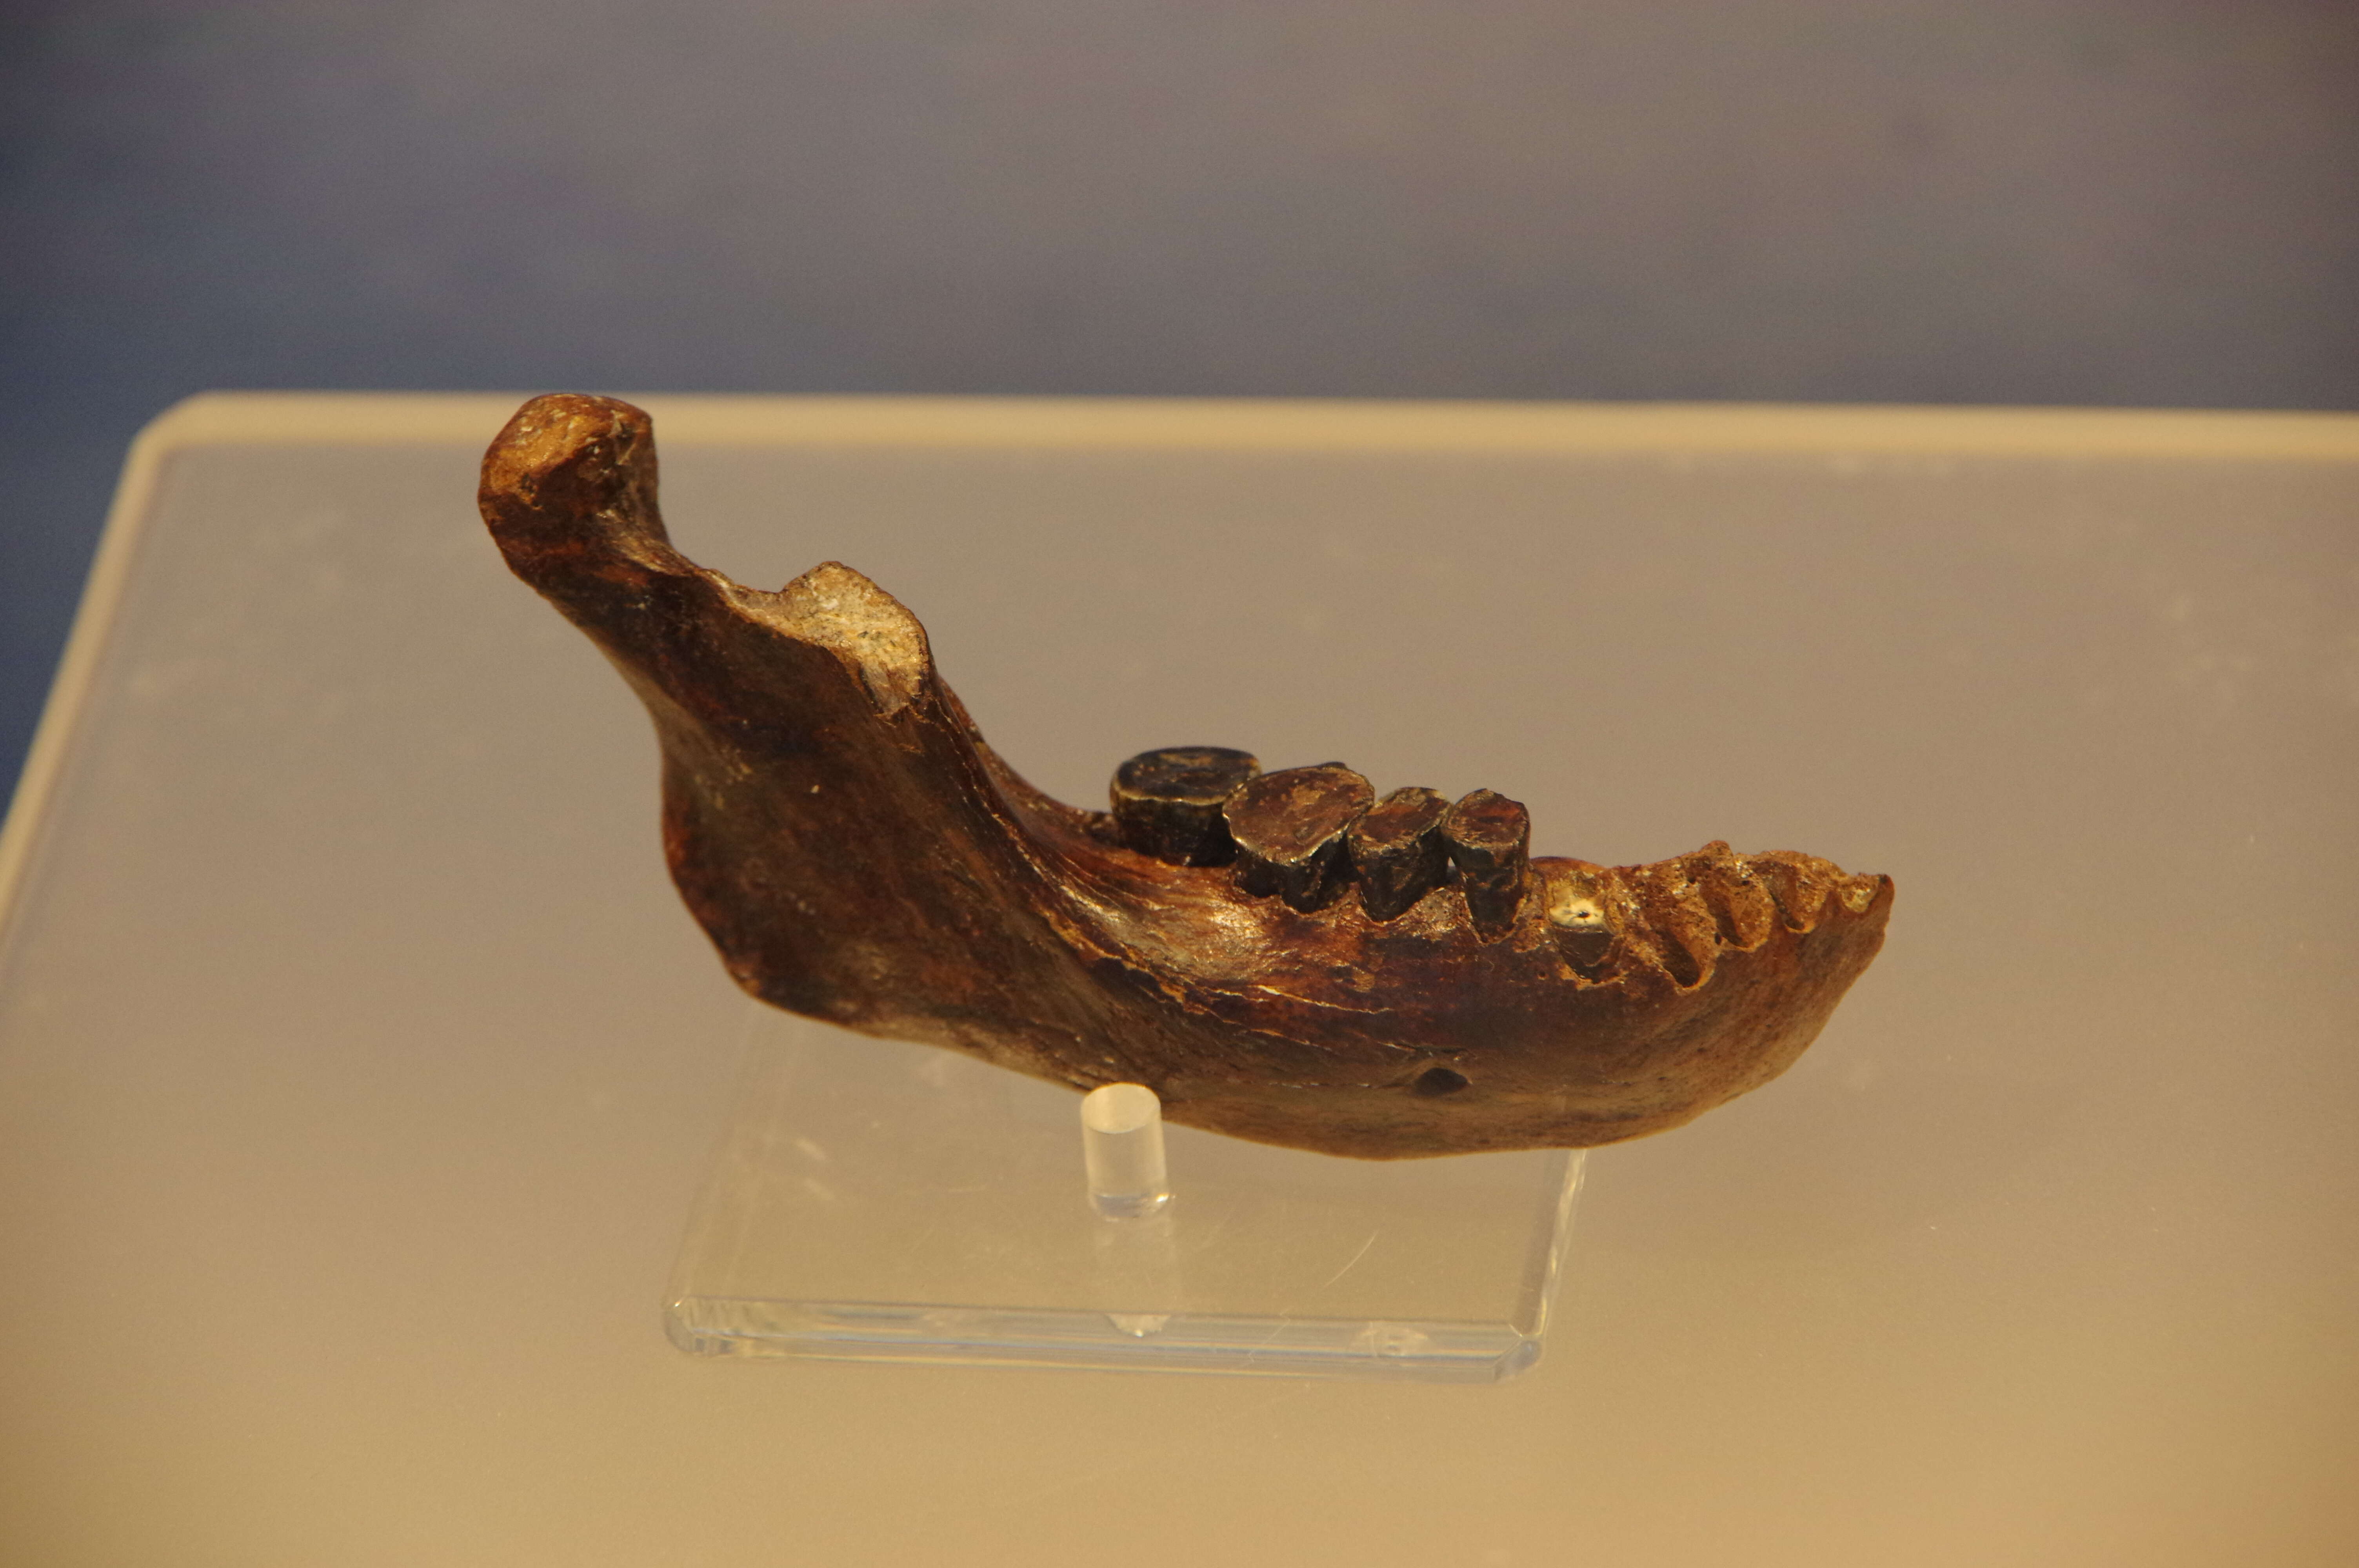 Plancia ëd Homo tsaichangensis